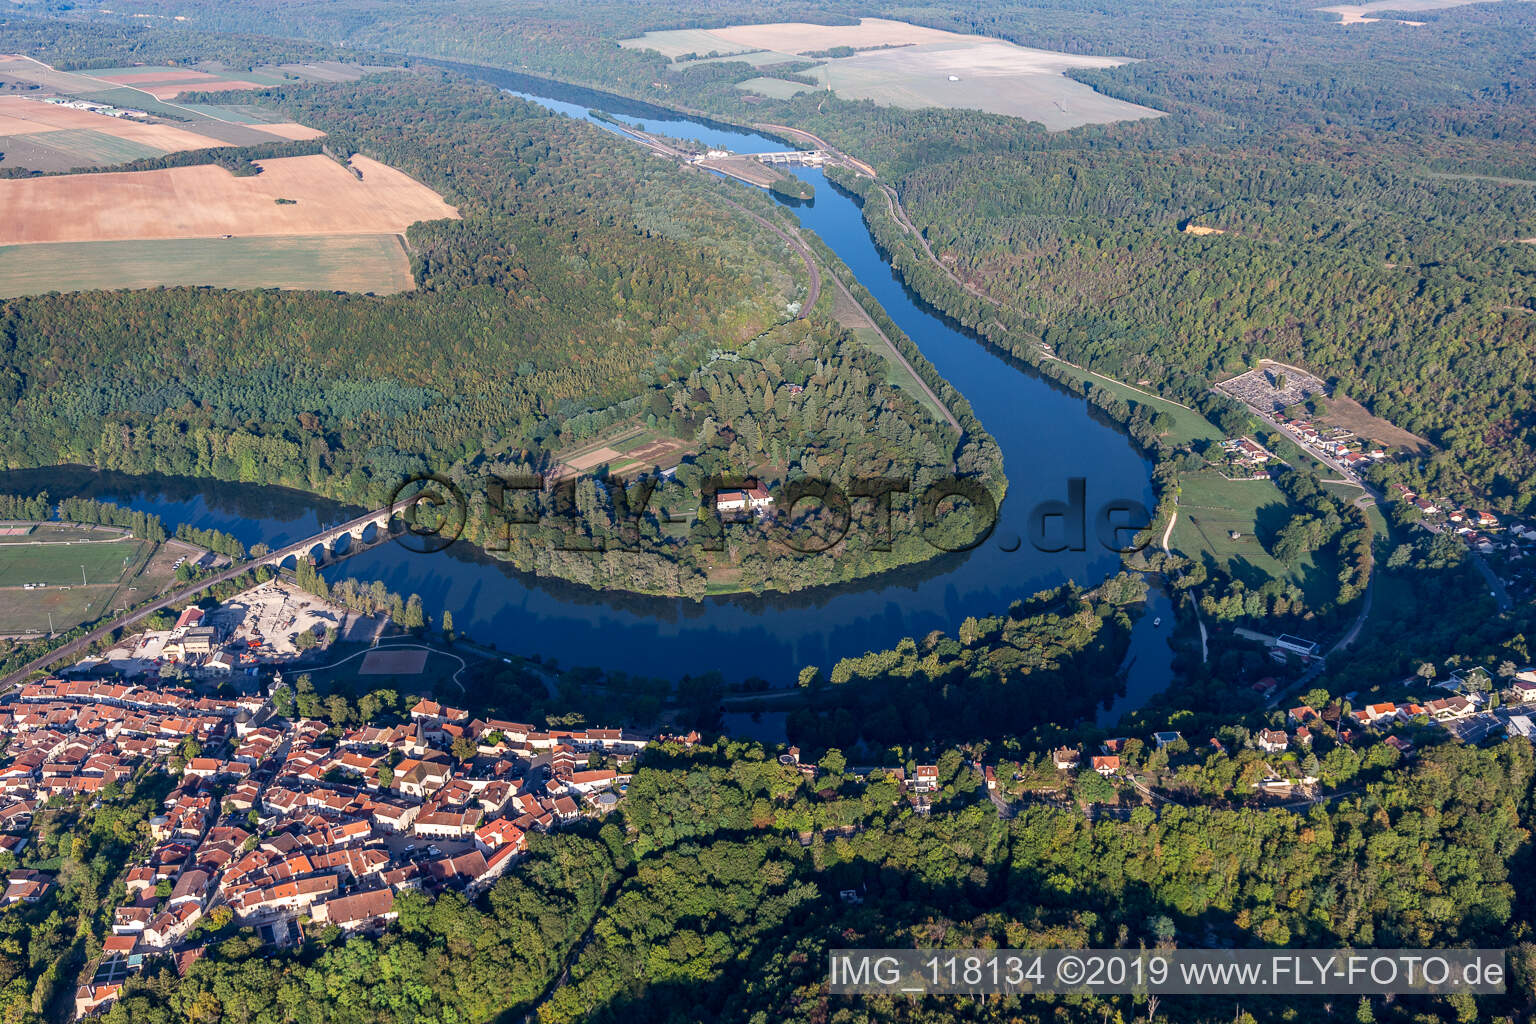 Luftbild von Moselknie, Domaine des Eaux Bleues in Pagny-la-Blanche-Côte im Bundesland Meuse, Frankreich